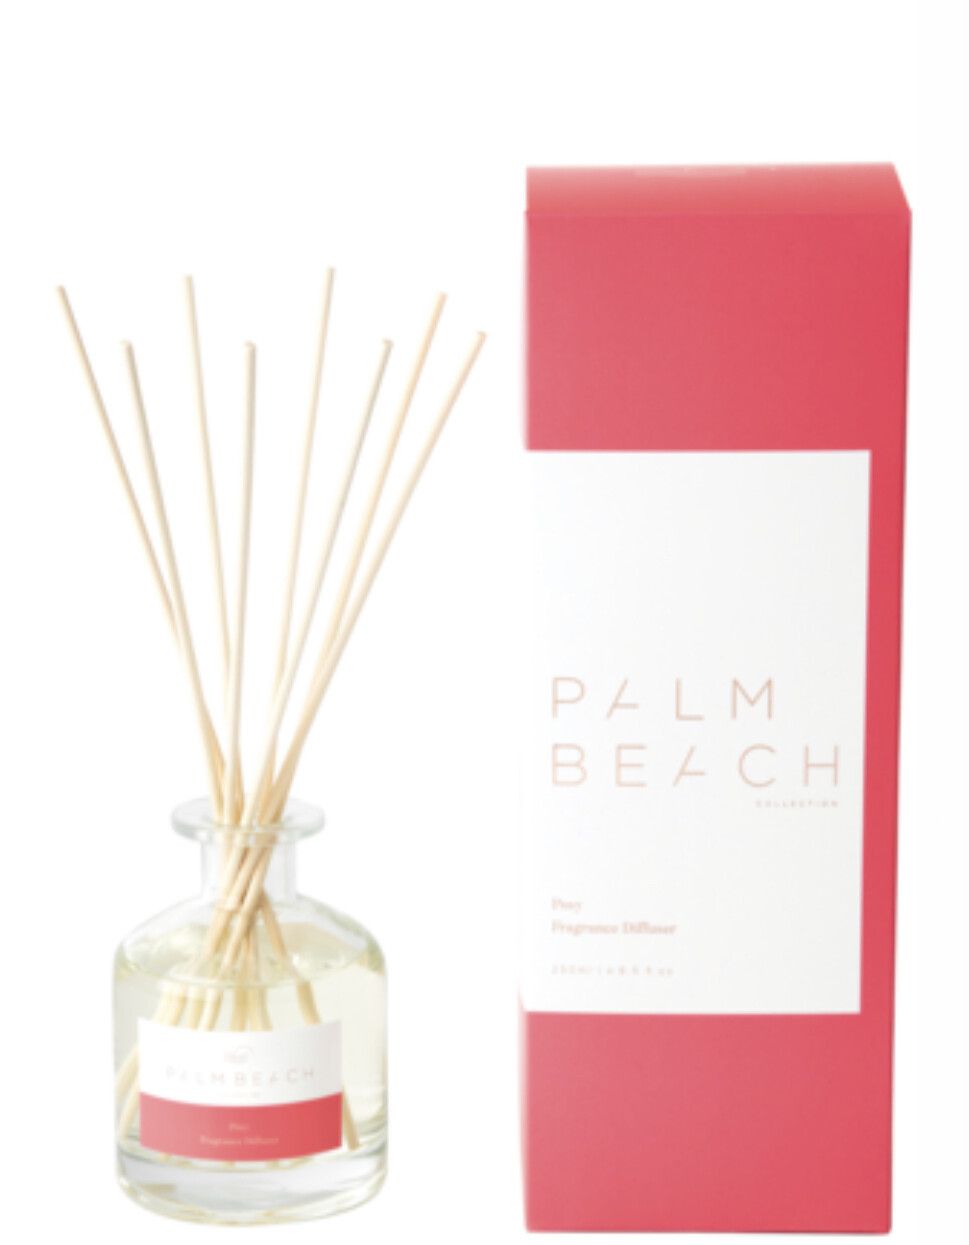 PALM BEACH - Posy 
250ml Fragrance Diffuser